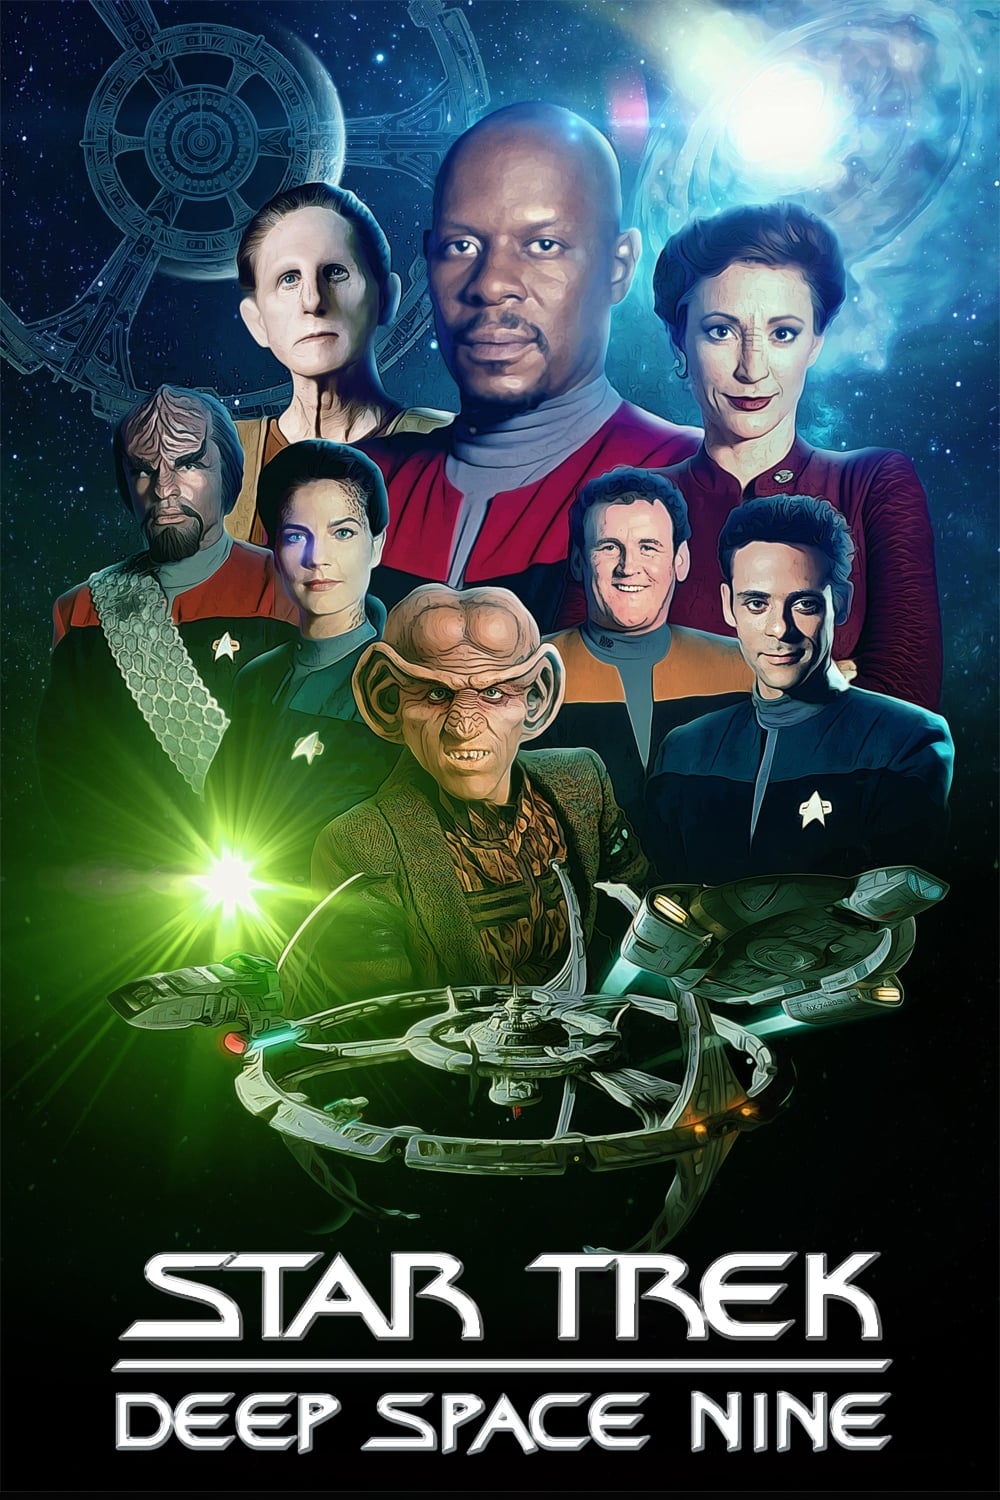 Star Trek: Deep Space Nine TV Shows About Alien Planet